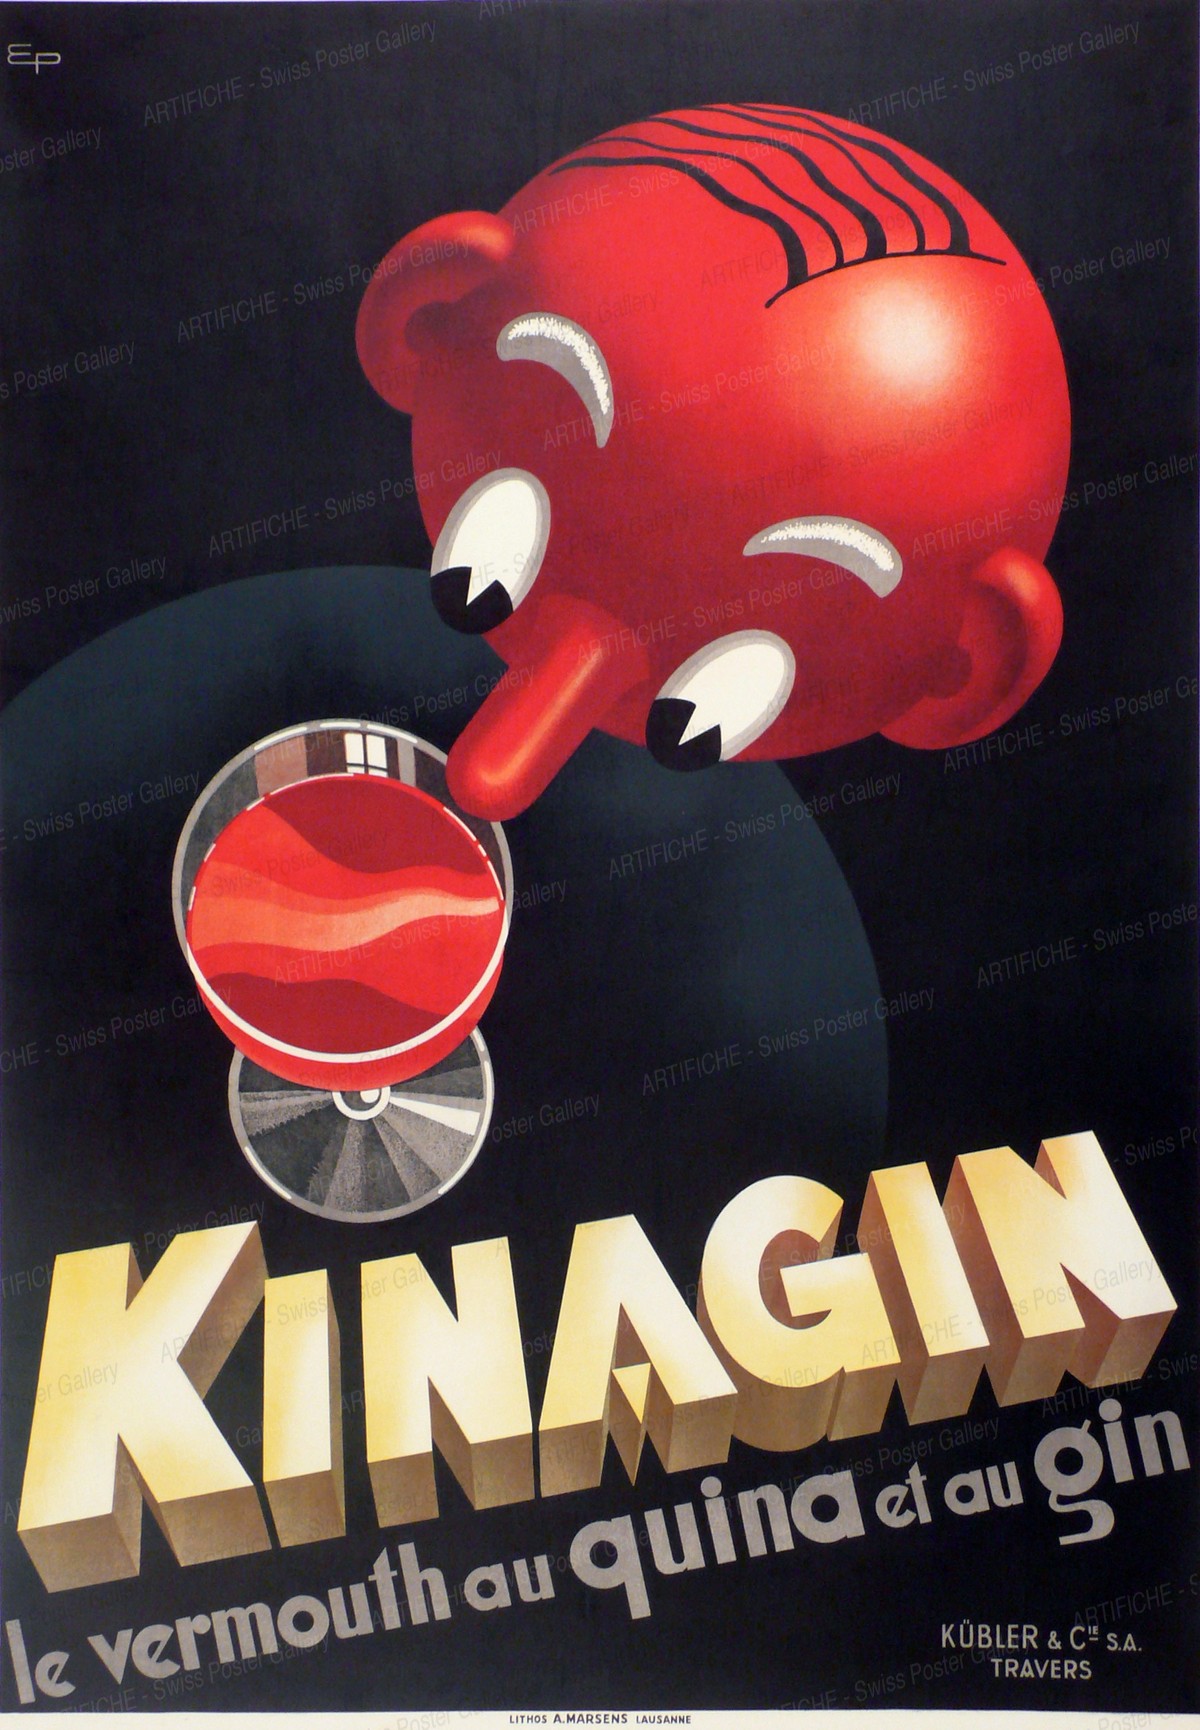 KINAGIN – le vermouth au Quina et au Gin, E. Patké